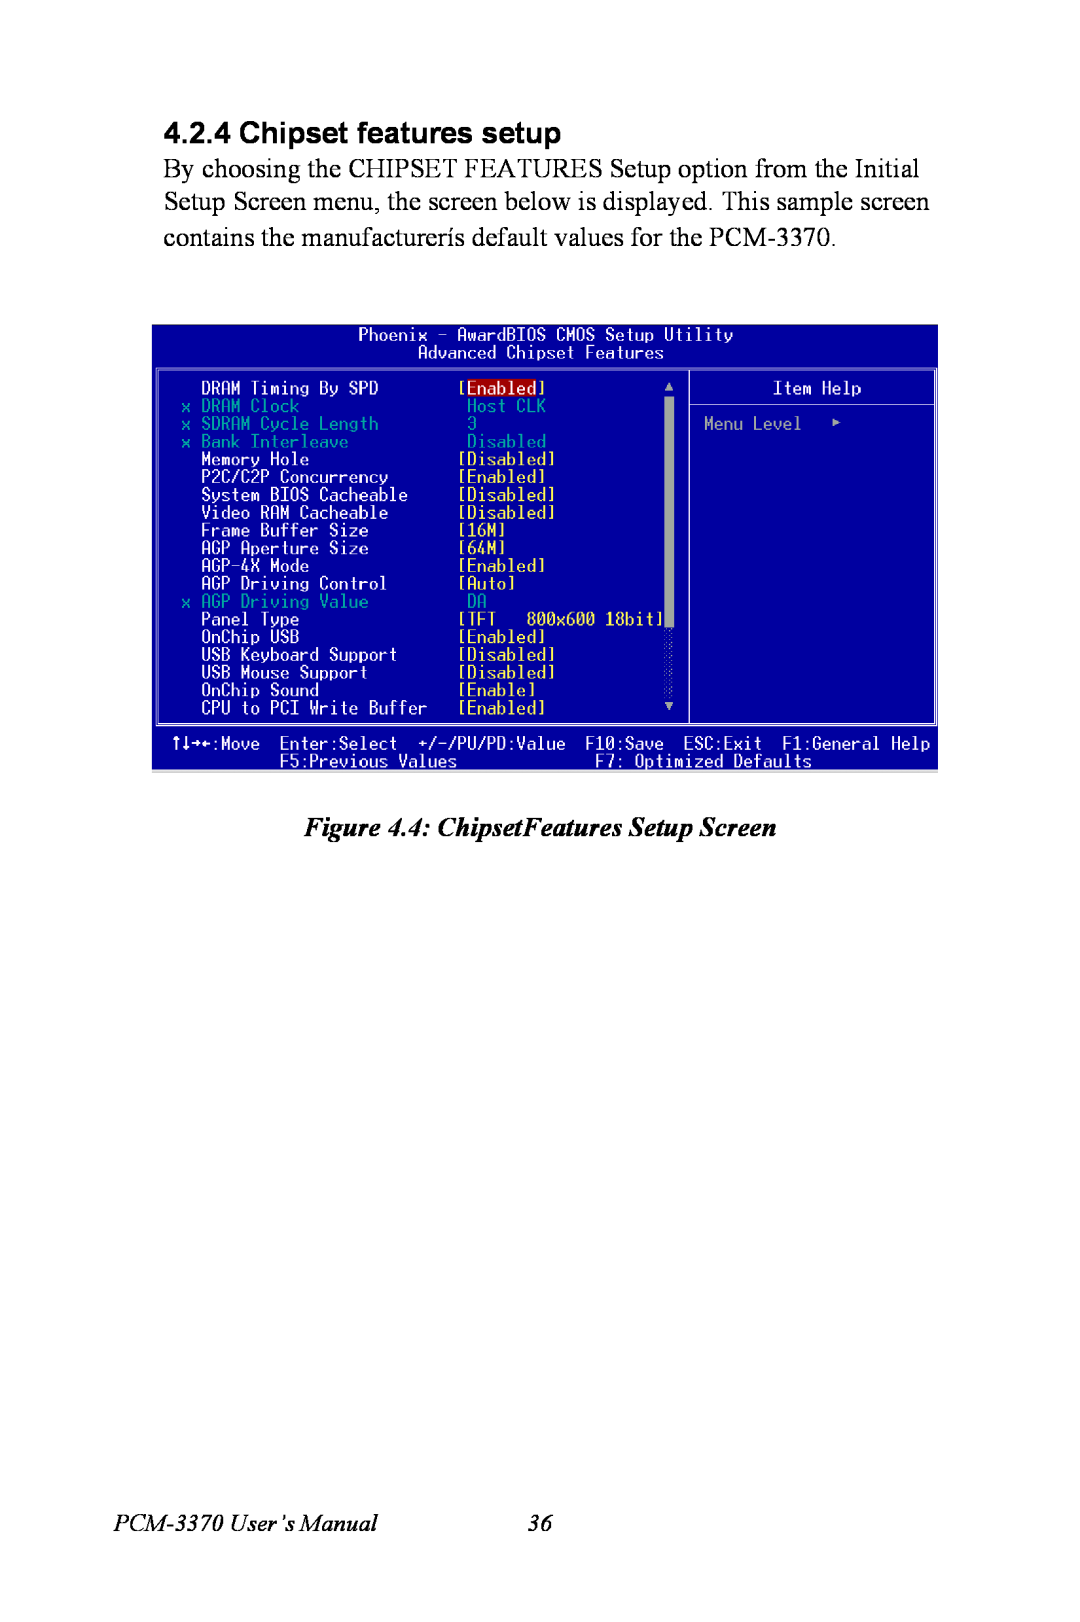 Intel user manual Chipset features setup, 4 ChipsetFeatures Setup Screen, PCM-3370 User’s Manual 